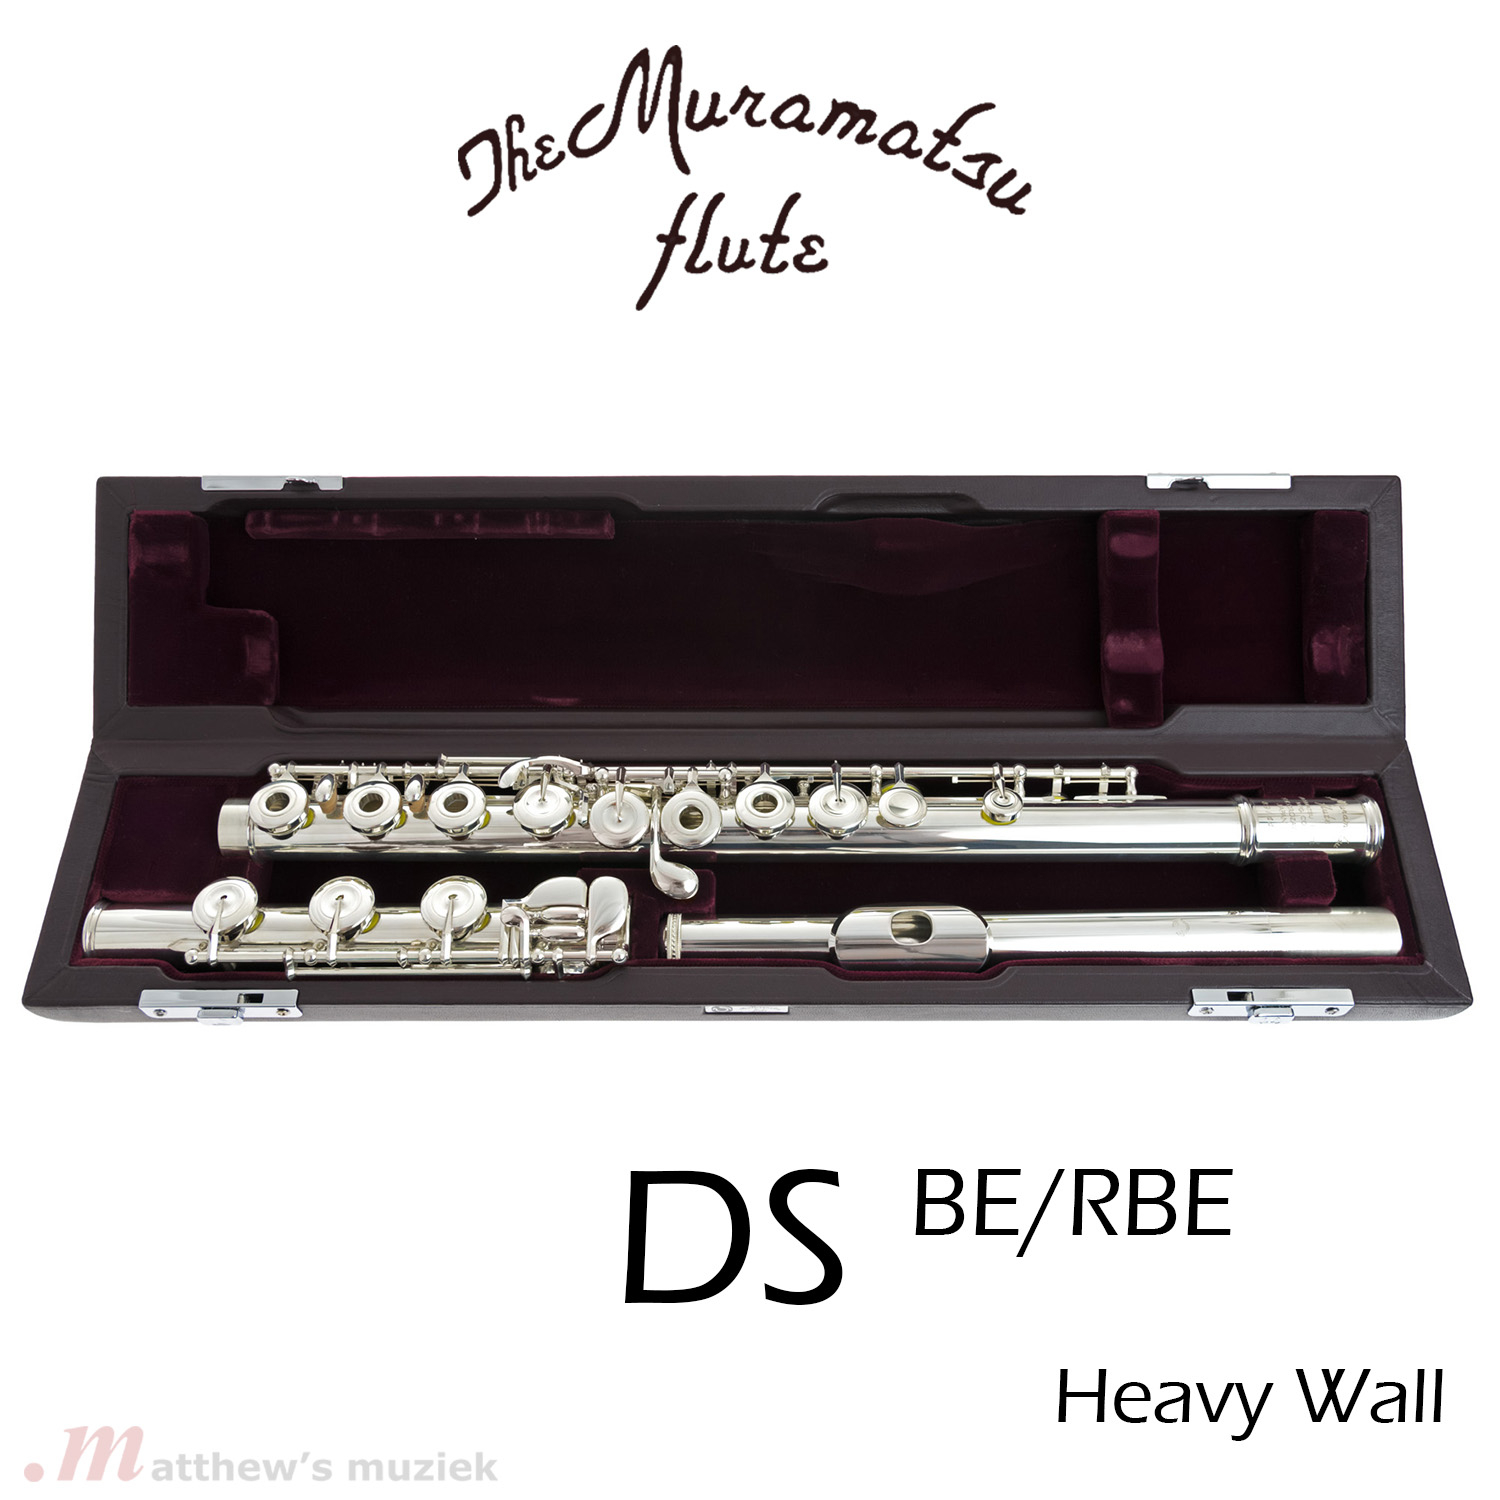 Muramatsu Flute - DS BE - Heavy wall